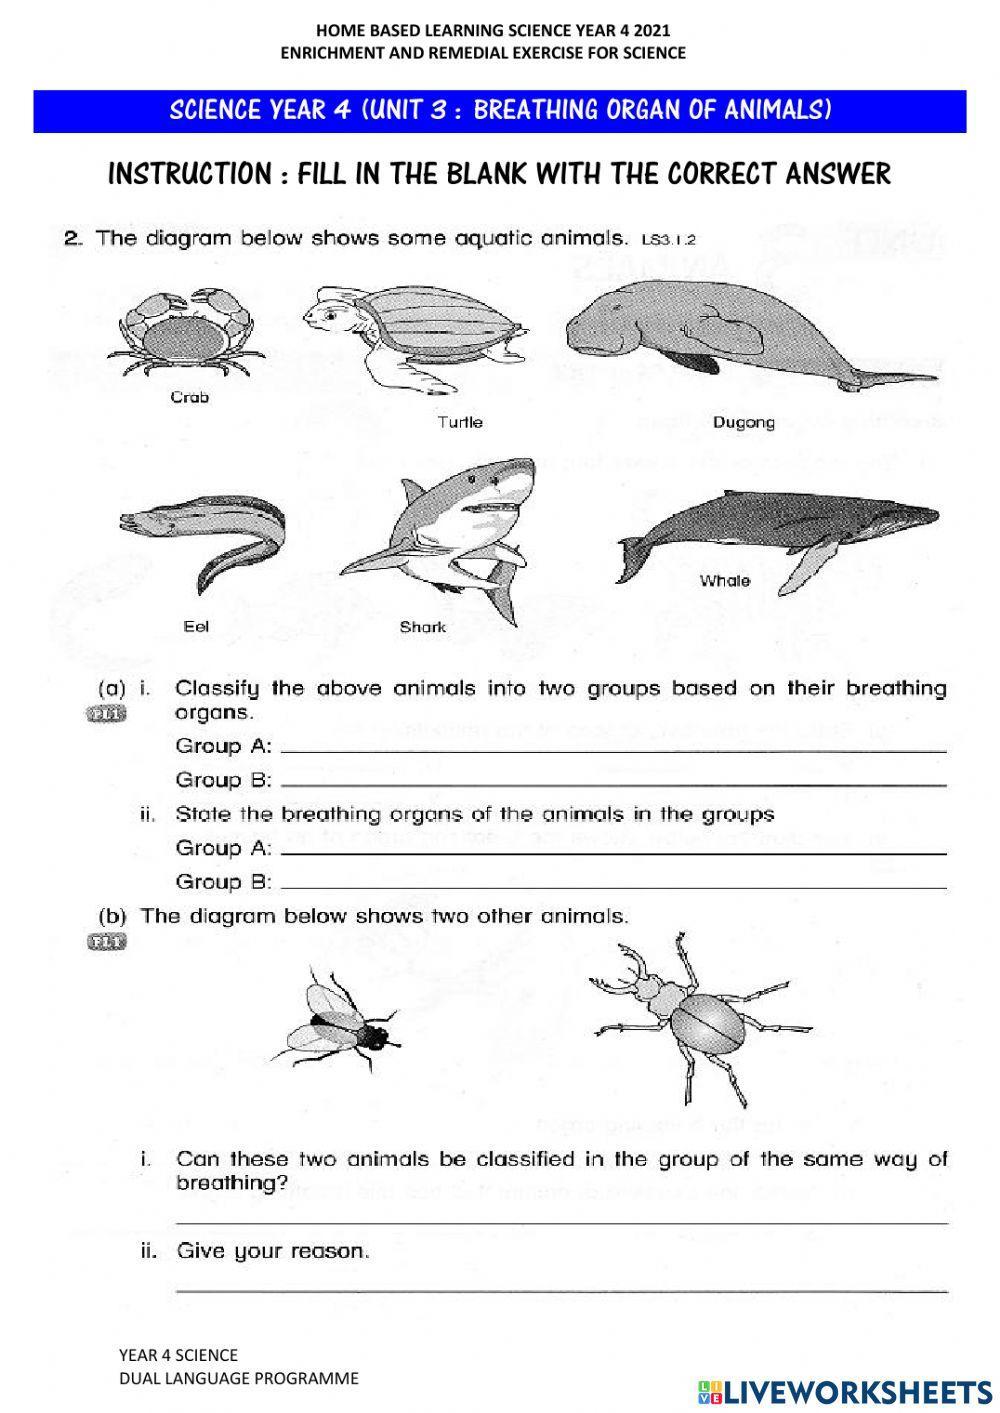 Breathing Organs Of Animals (Set 3)